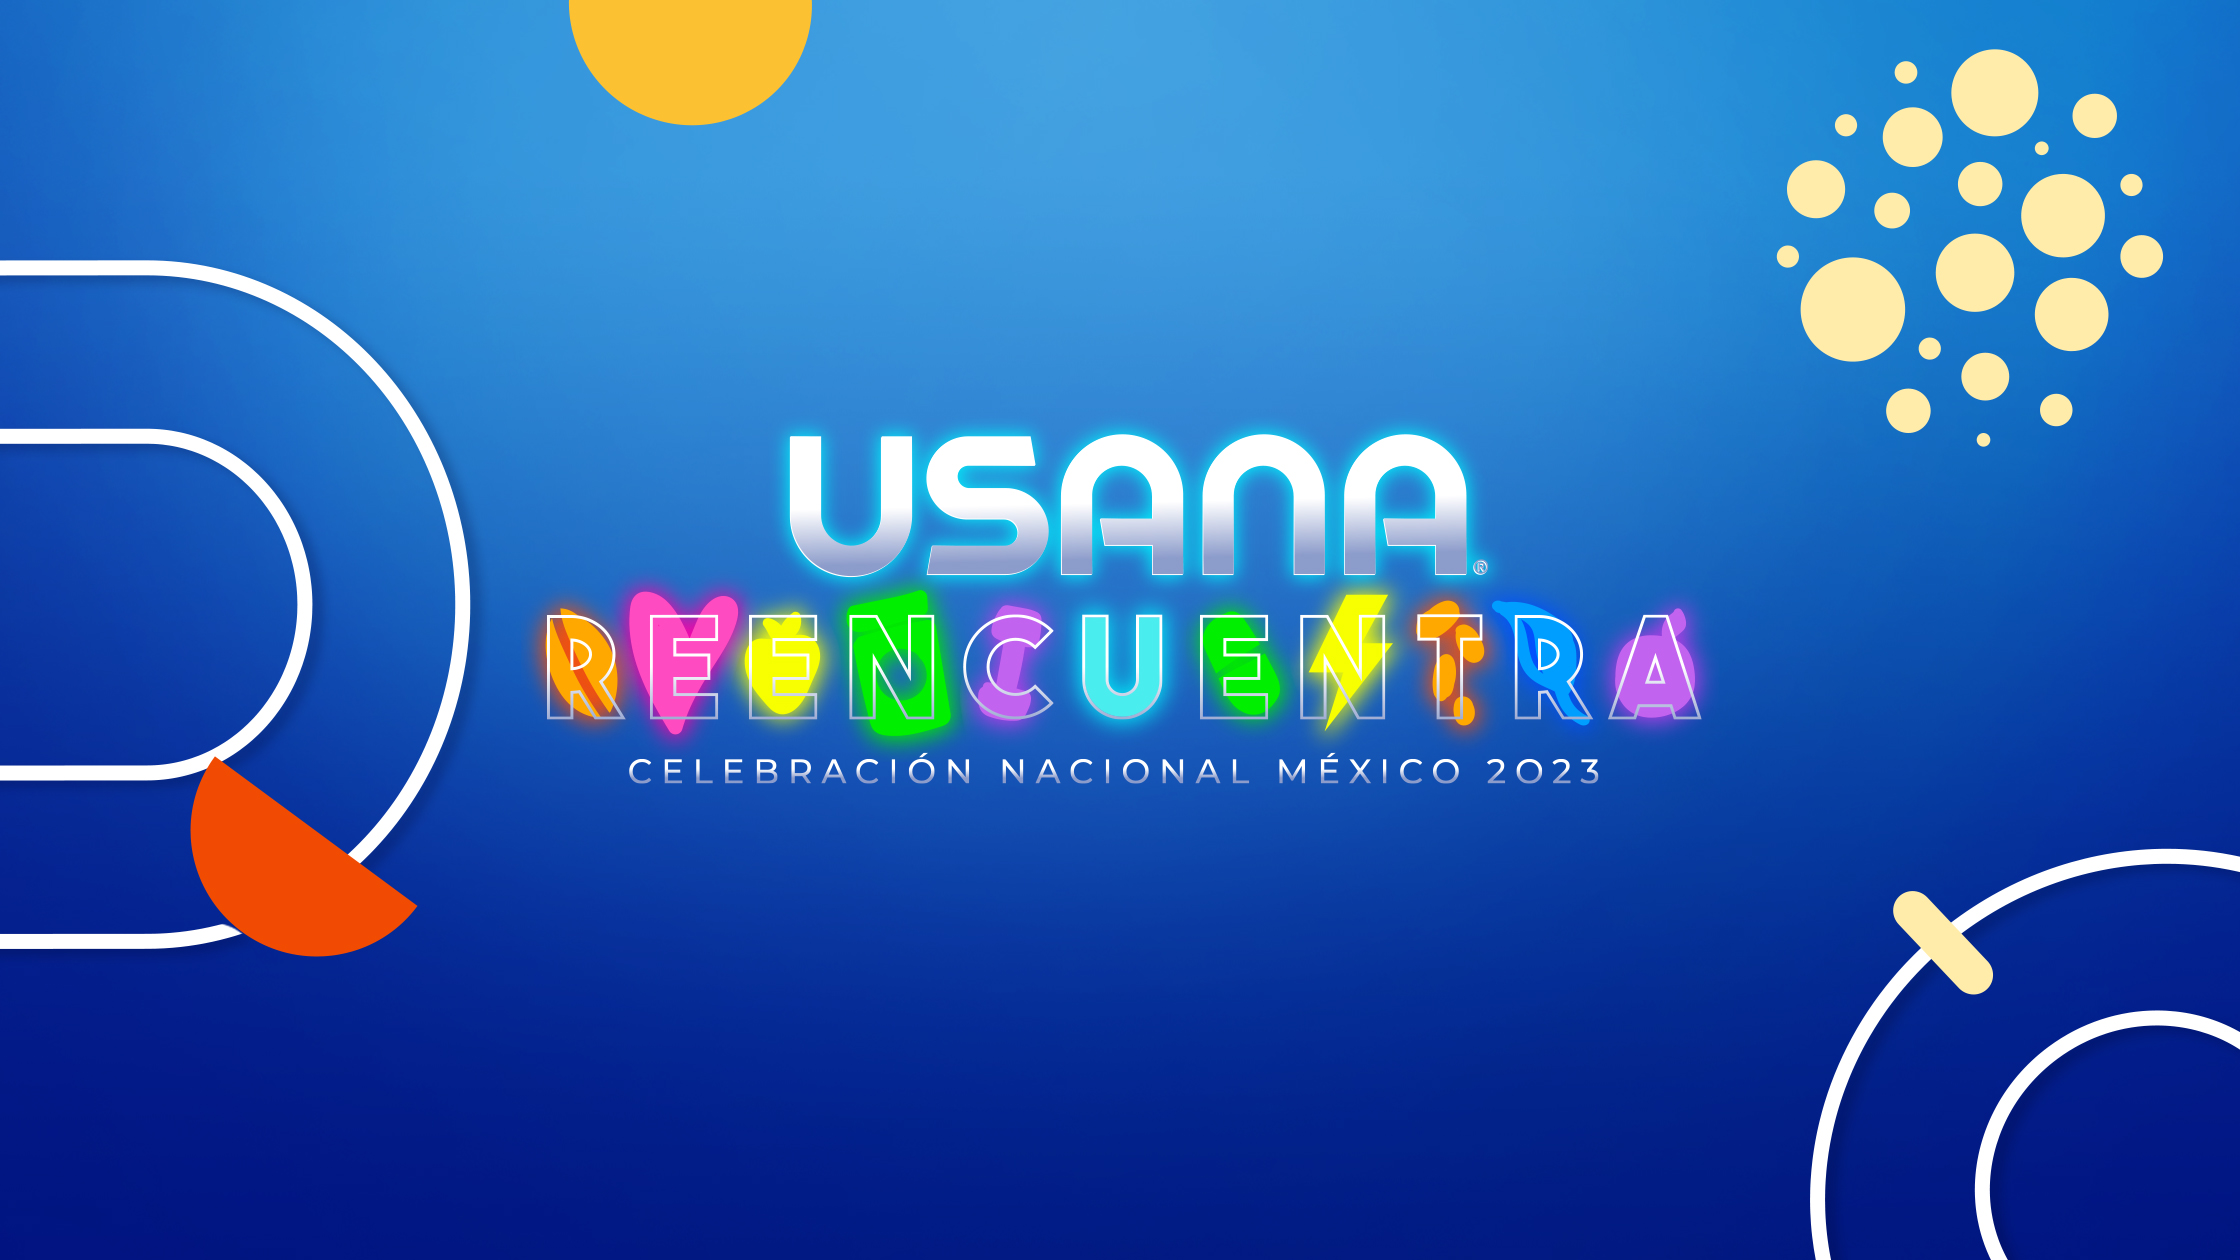 Celebración Nacional USANA REENCUENTRA 2023